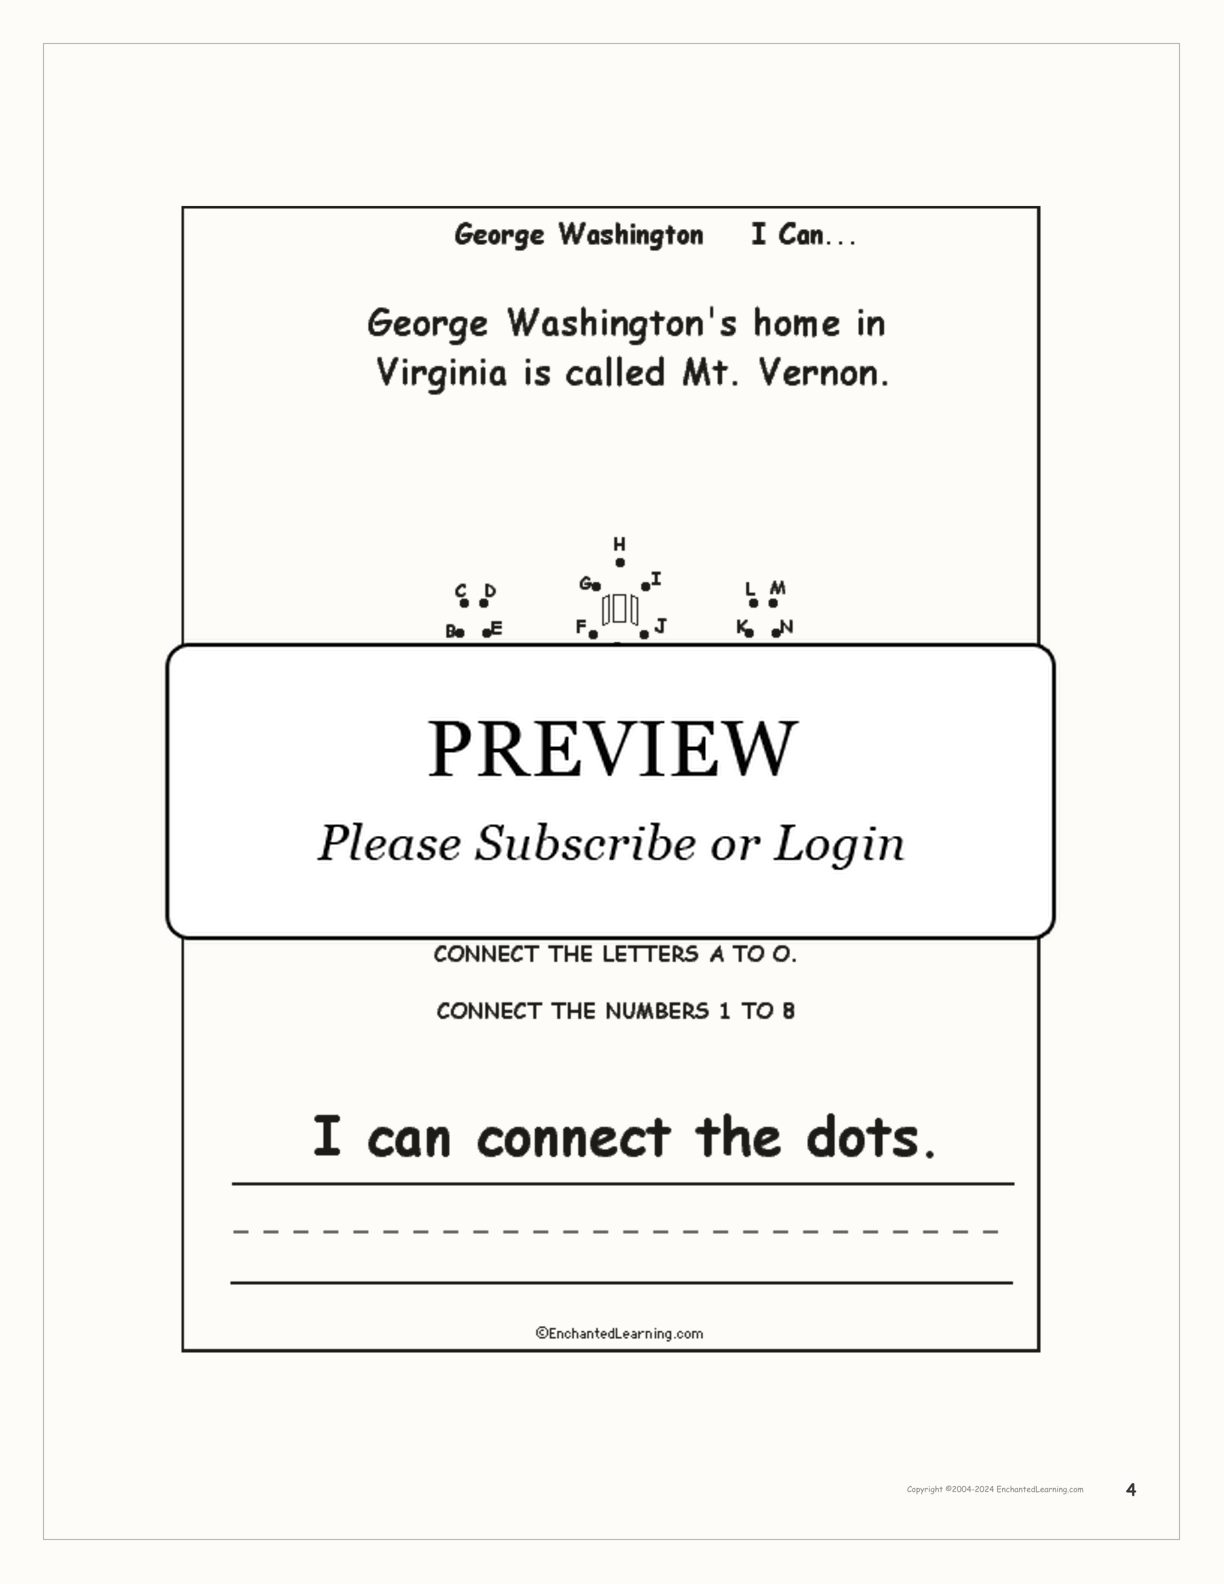 George Washington, I Can... interactive worksheet page 4